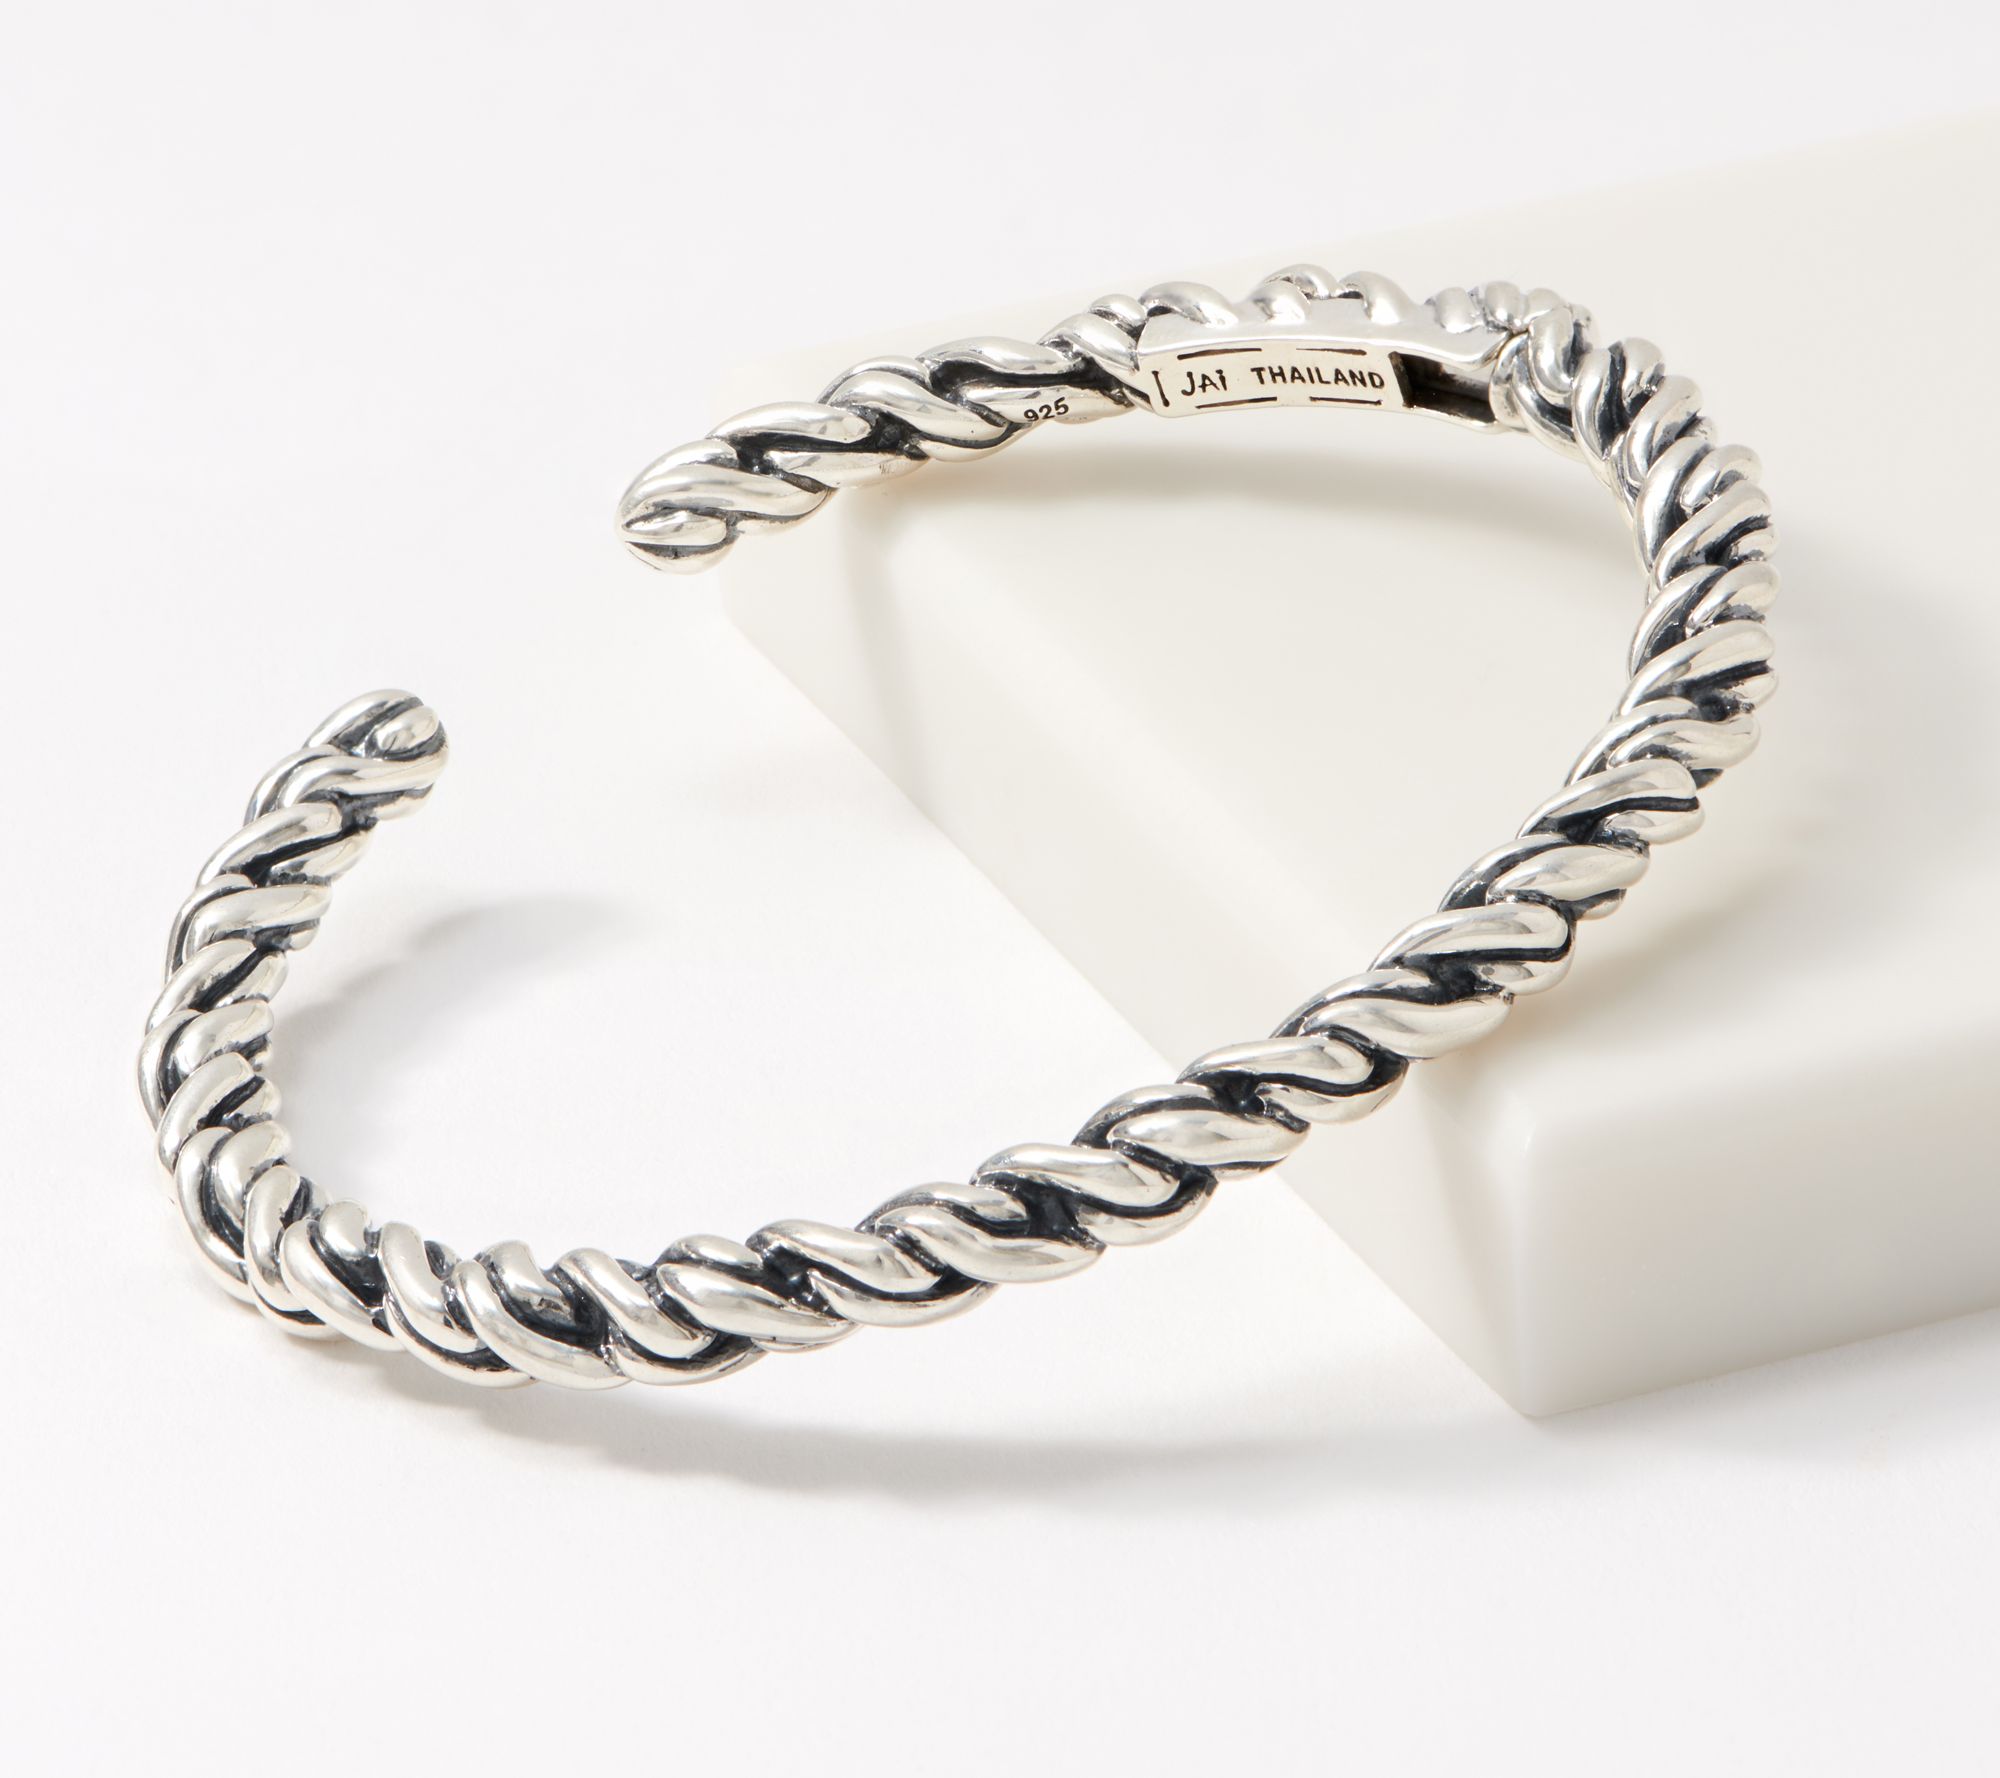 Carved silver cuff bracelet